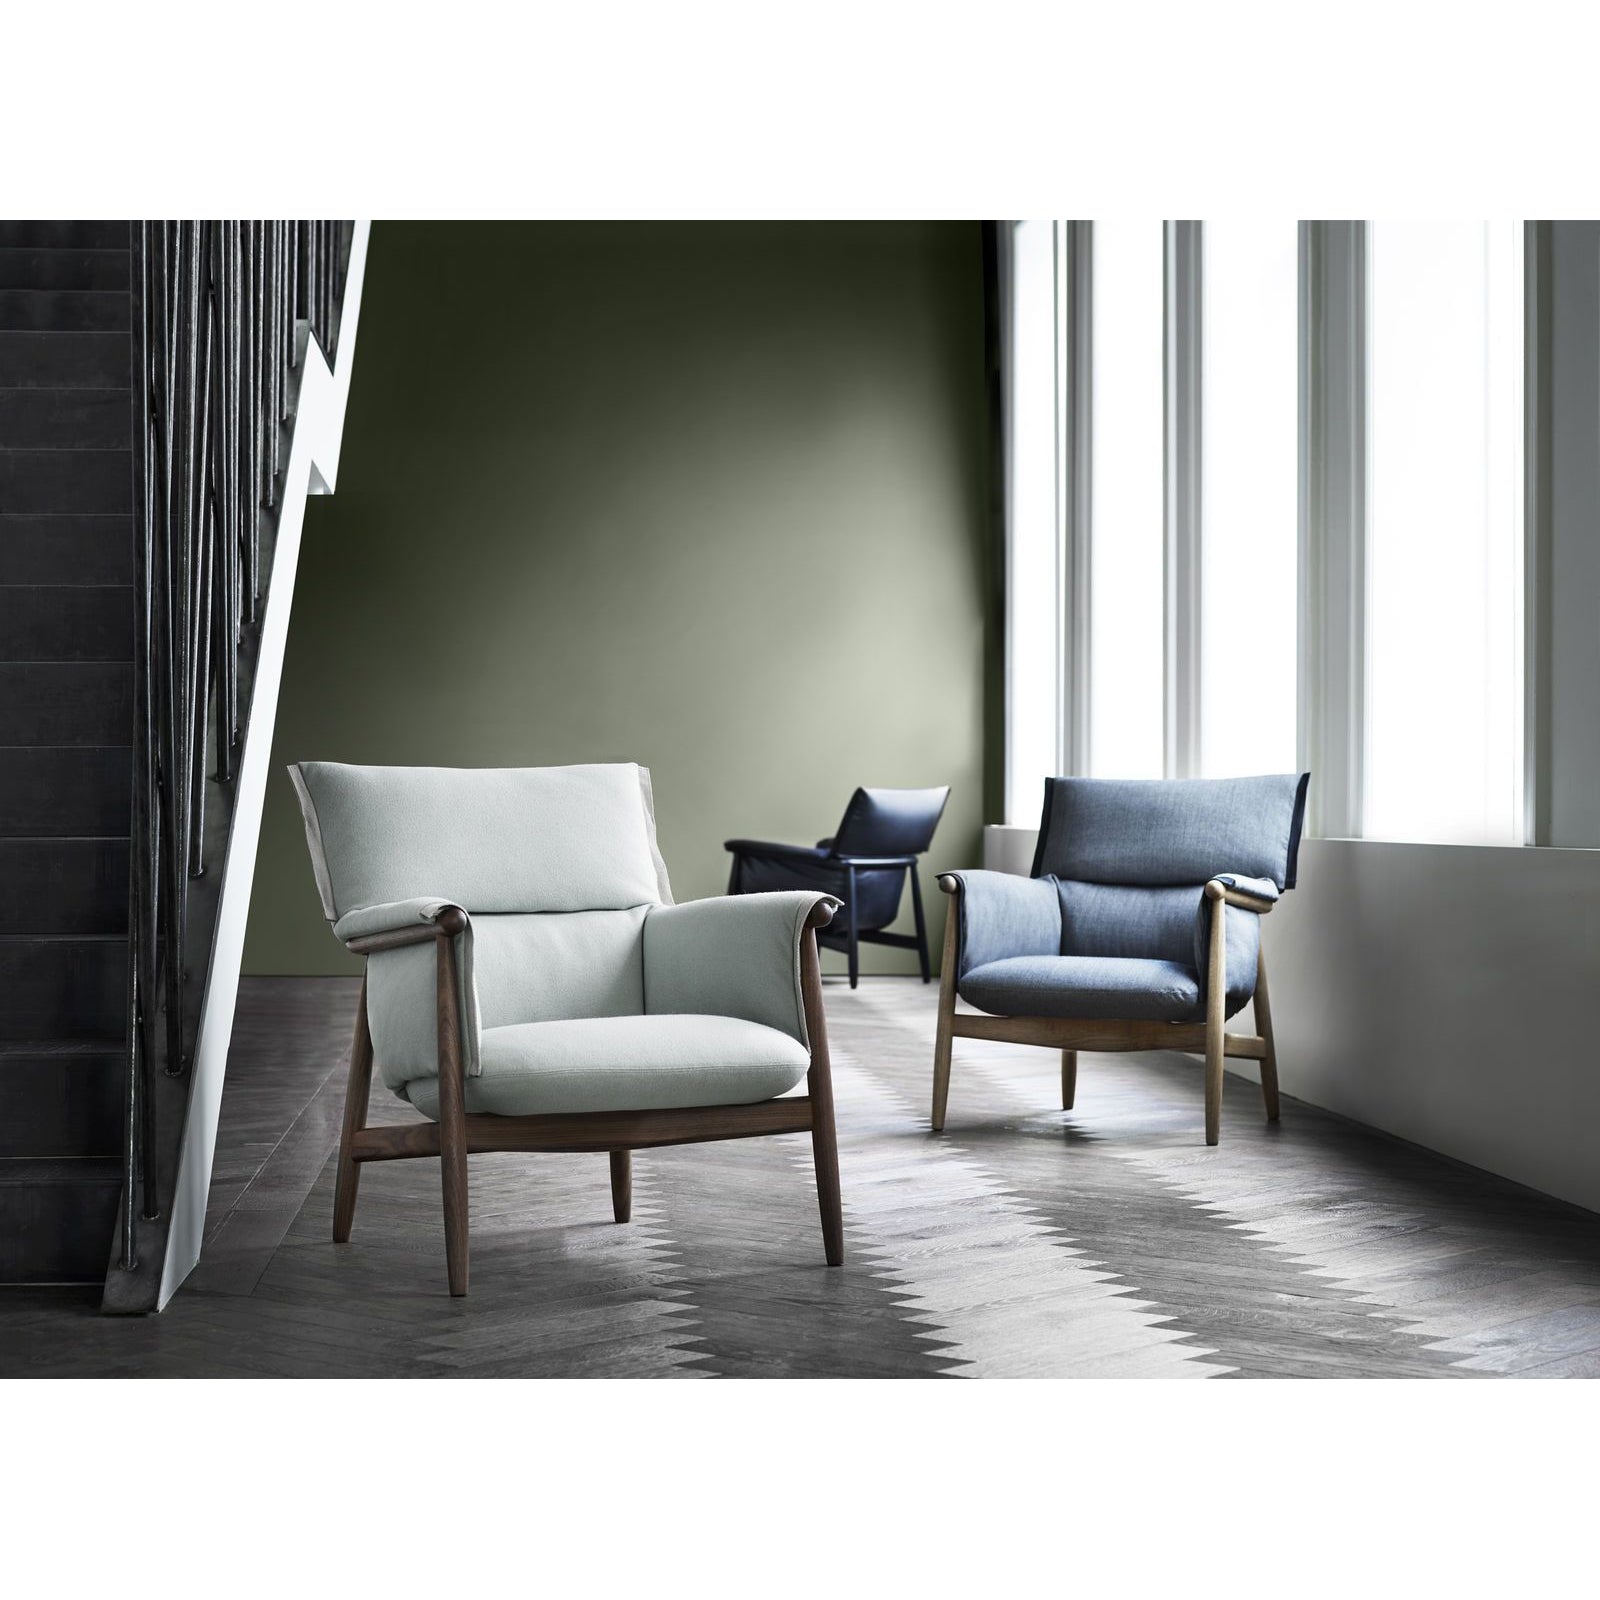 Carl Hansen E005 Embrace stoel, gekleurd eiken/zwart leer